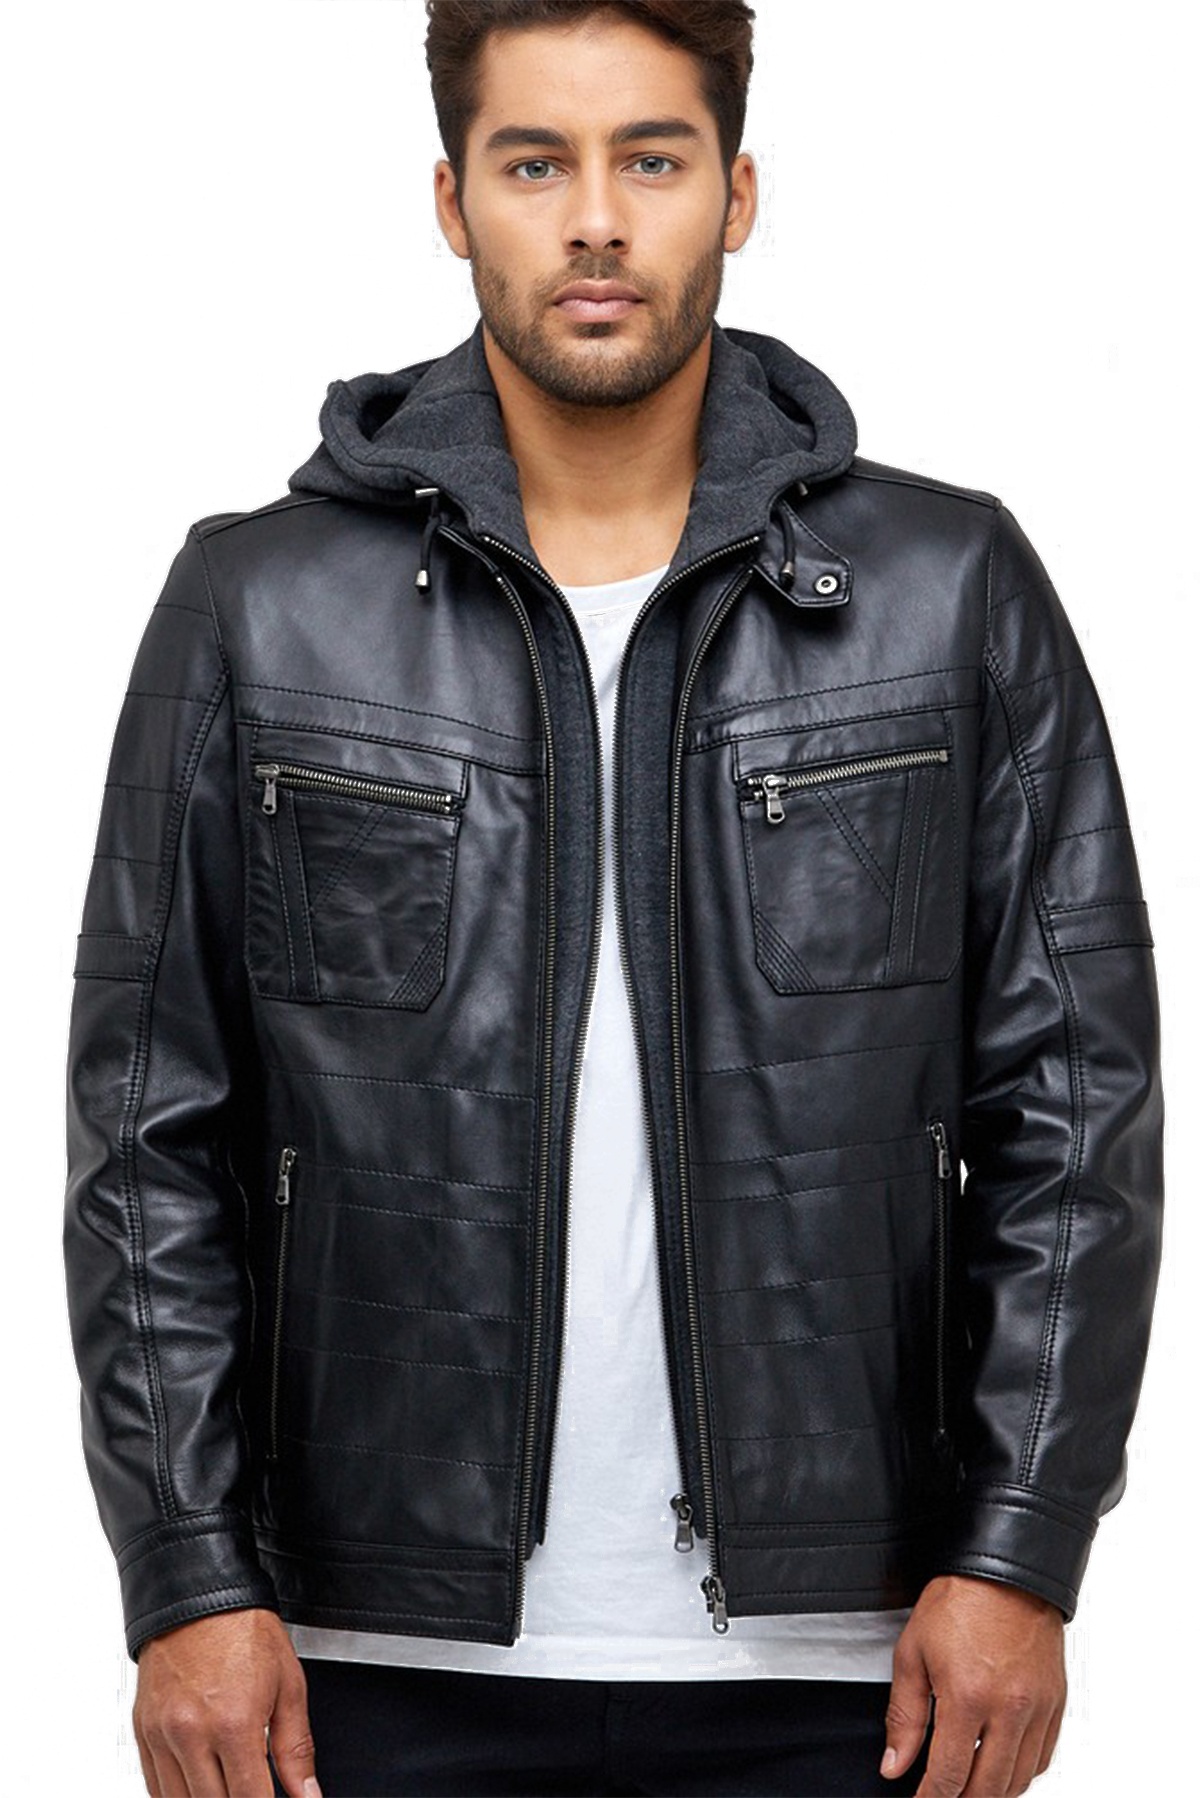 Rhine Classic Men’s Black Leather Hoodie Jacket